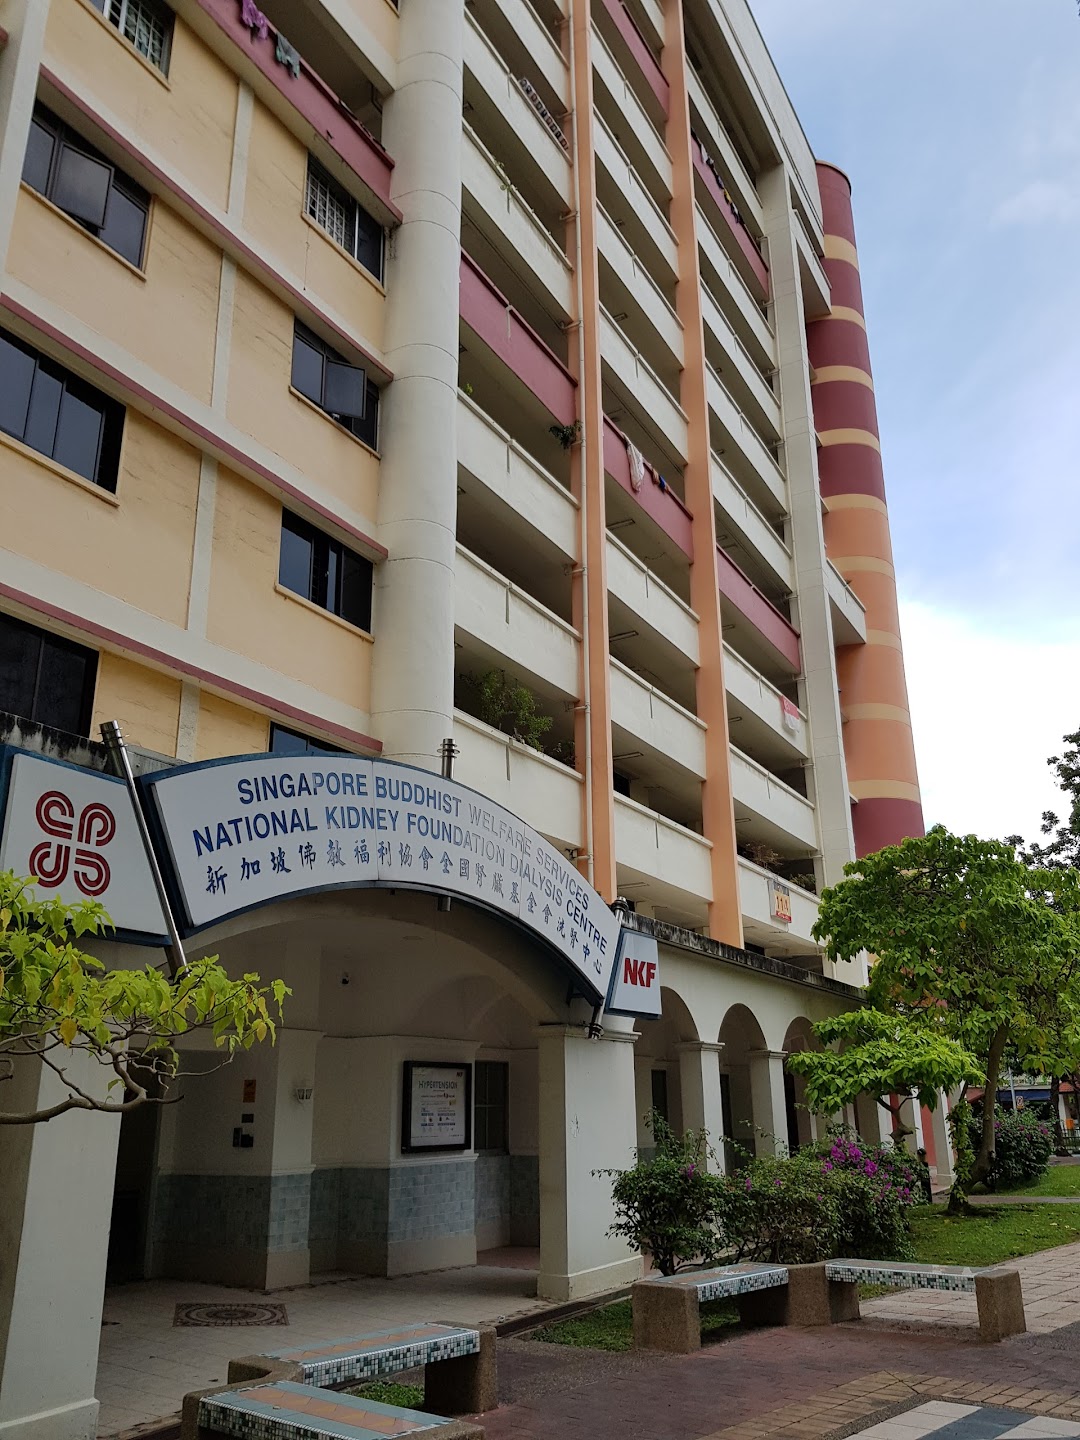 Singapore Buddhist Welfare Services NKF